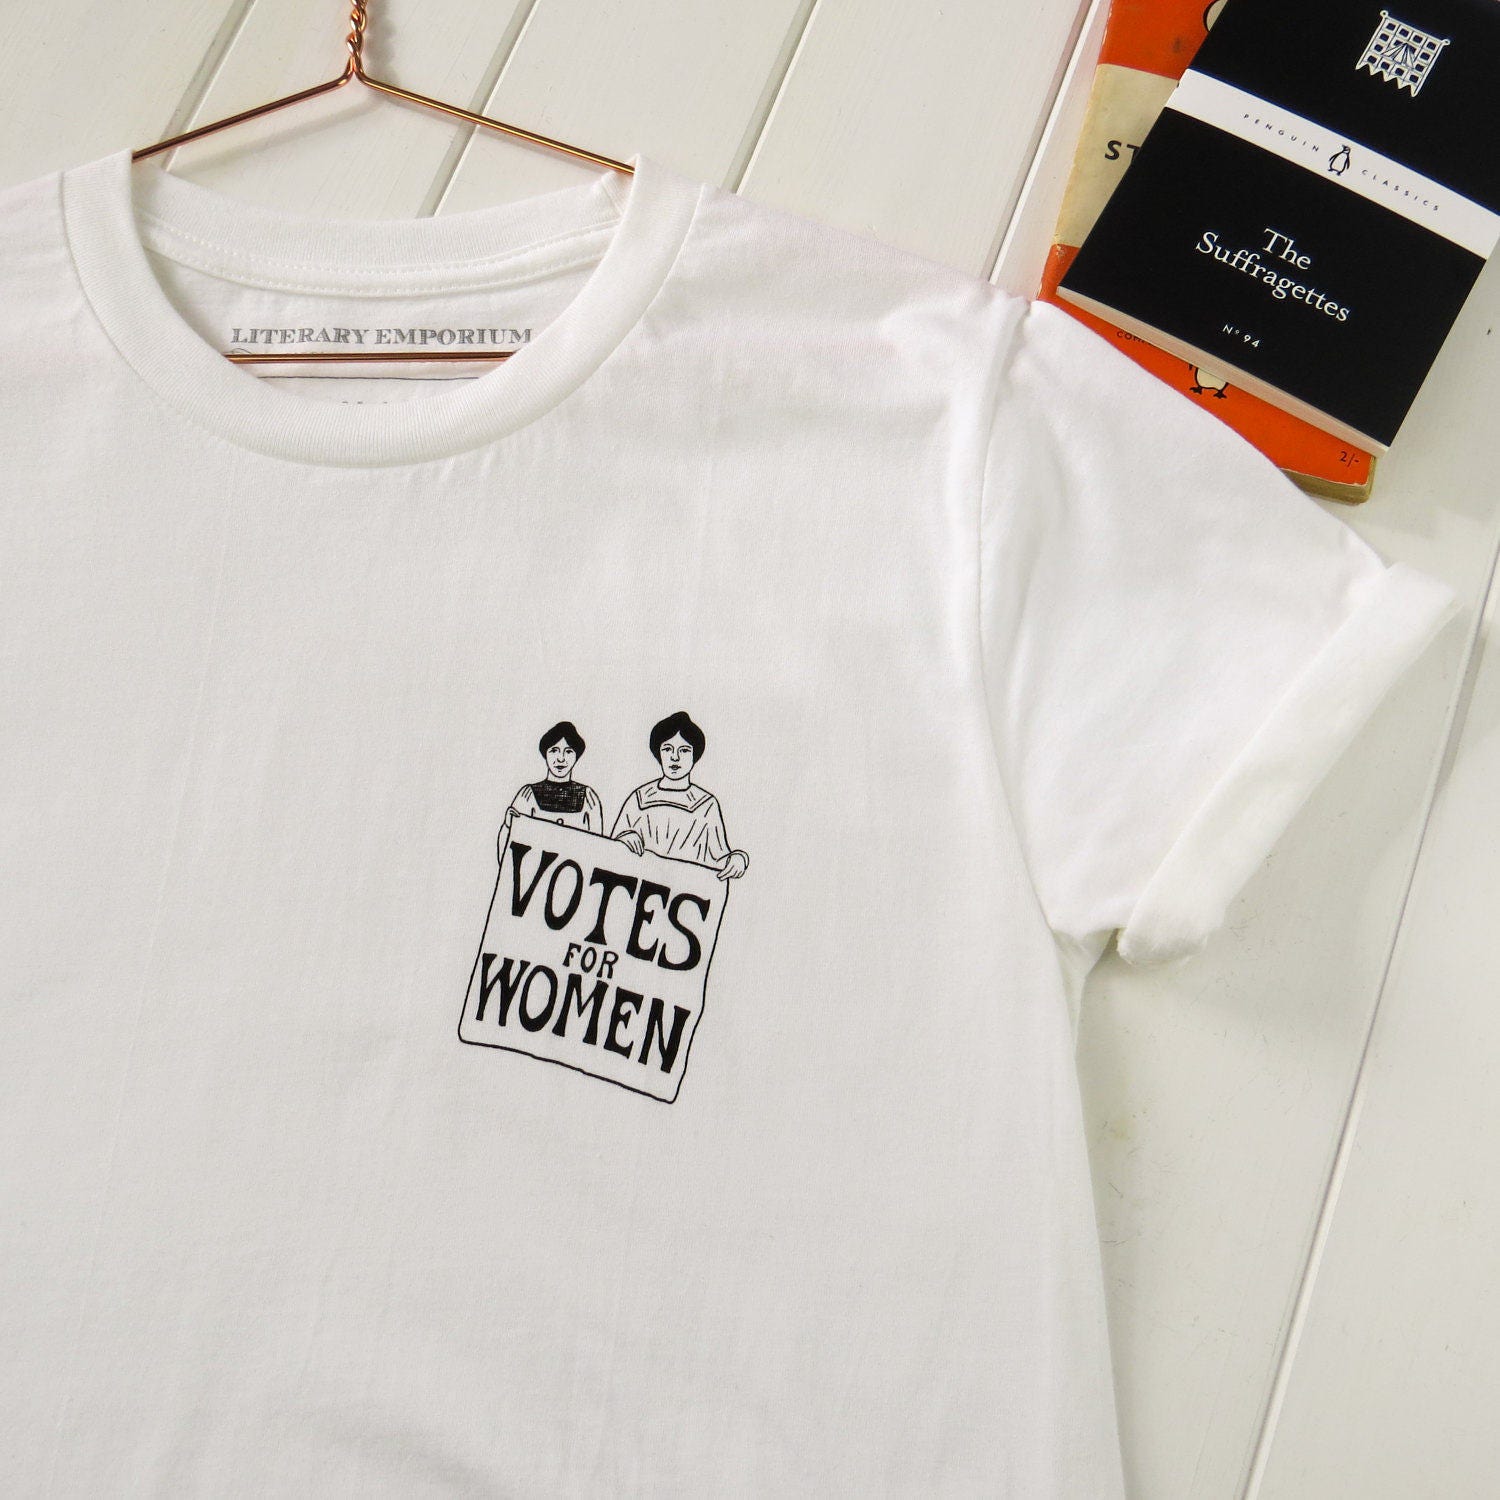 Votes for Women T-Shirt Feminist Tshirt Charity Tee The | Etsy